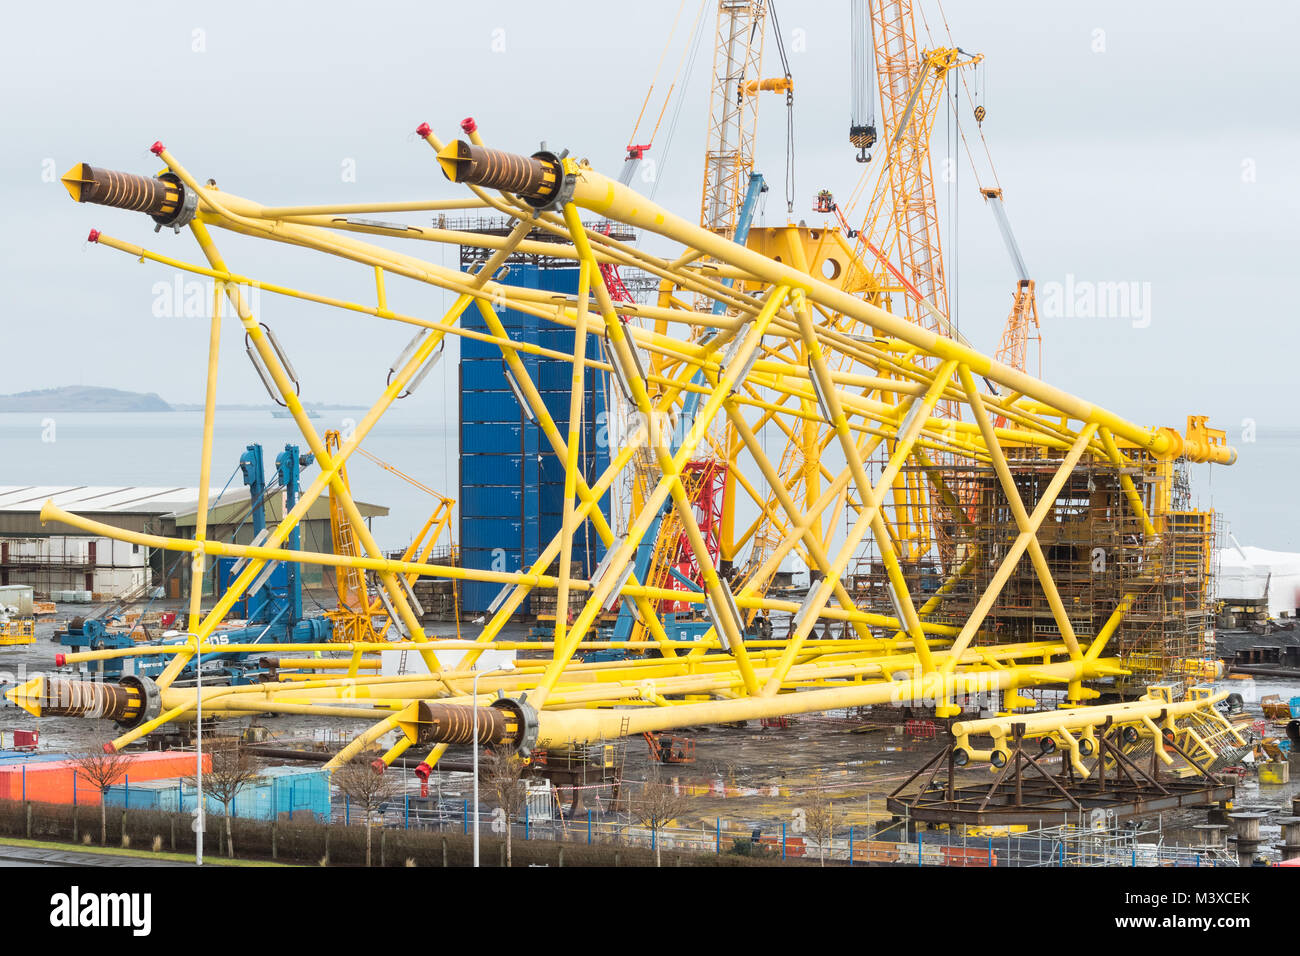 BiFab - Burntisland Fabrications Methil Burntisland Yard, Fife, Scotland, UK - workers being lifted by crane dwarfed by the yellow sub-sea jackets Stock Photo